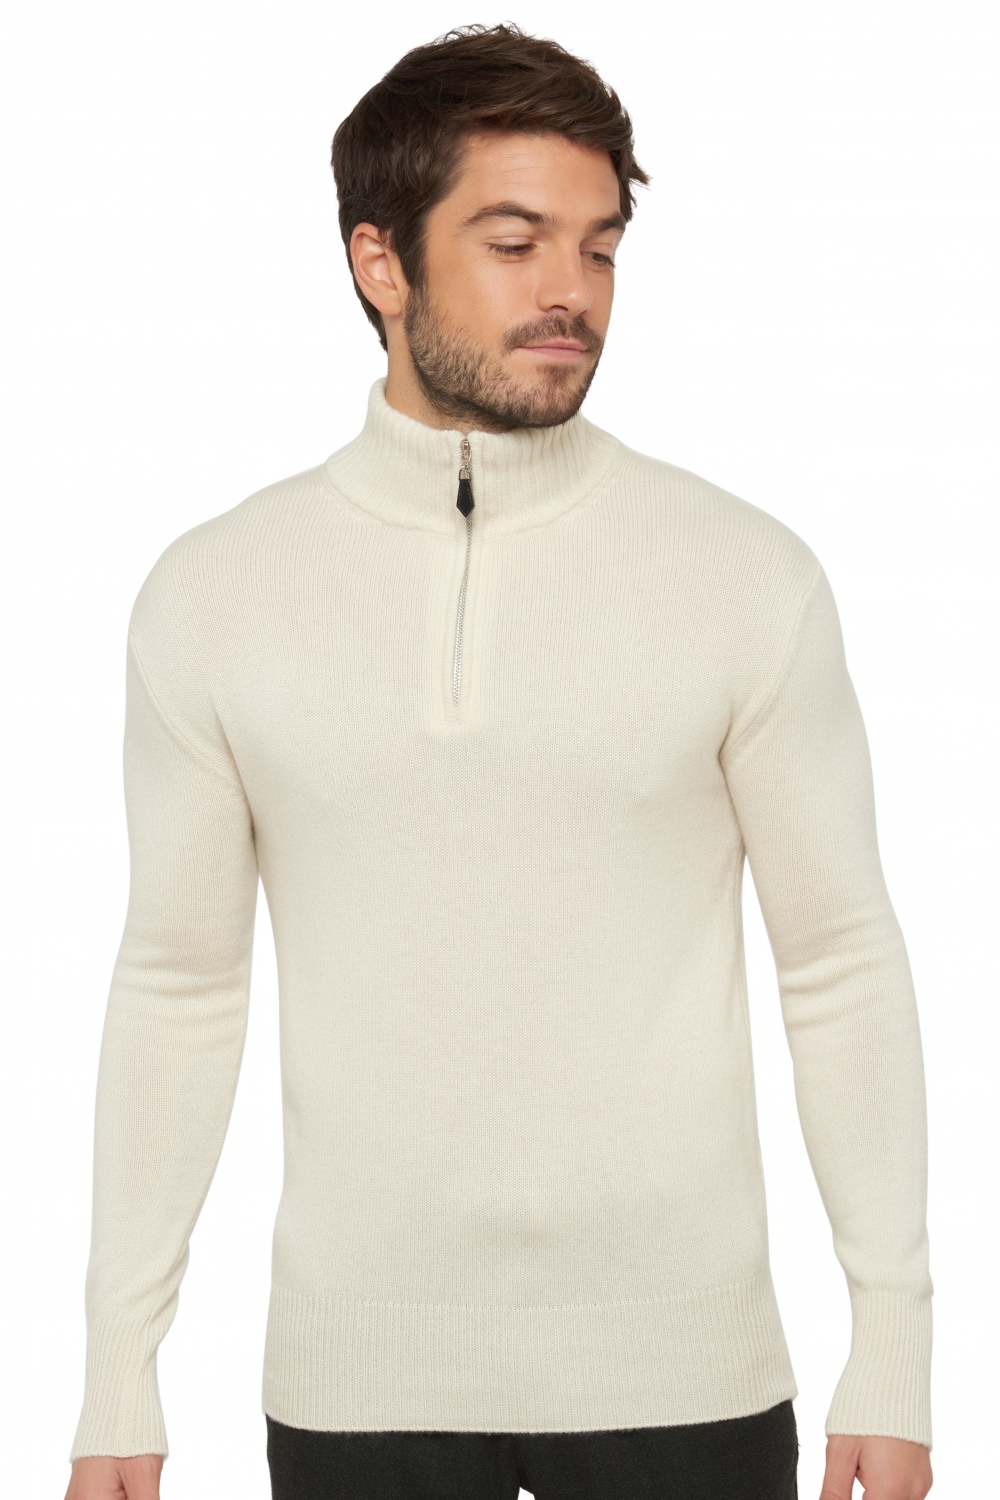 Cashmere men polo style sweaters donovan premium tenzin natural xs